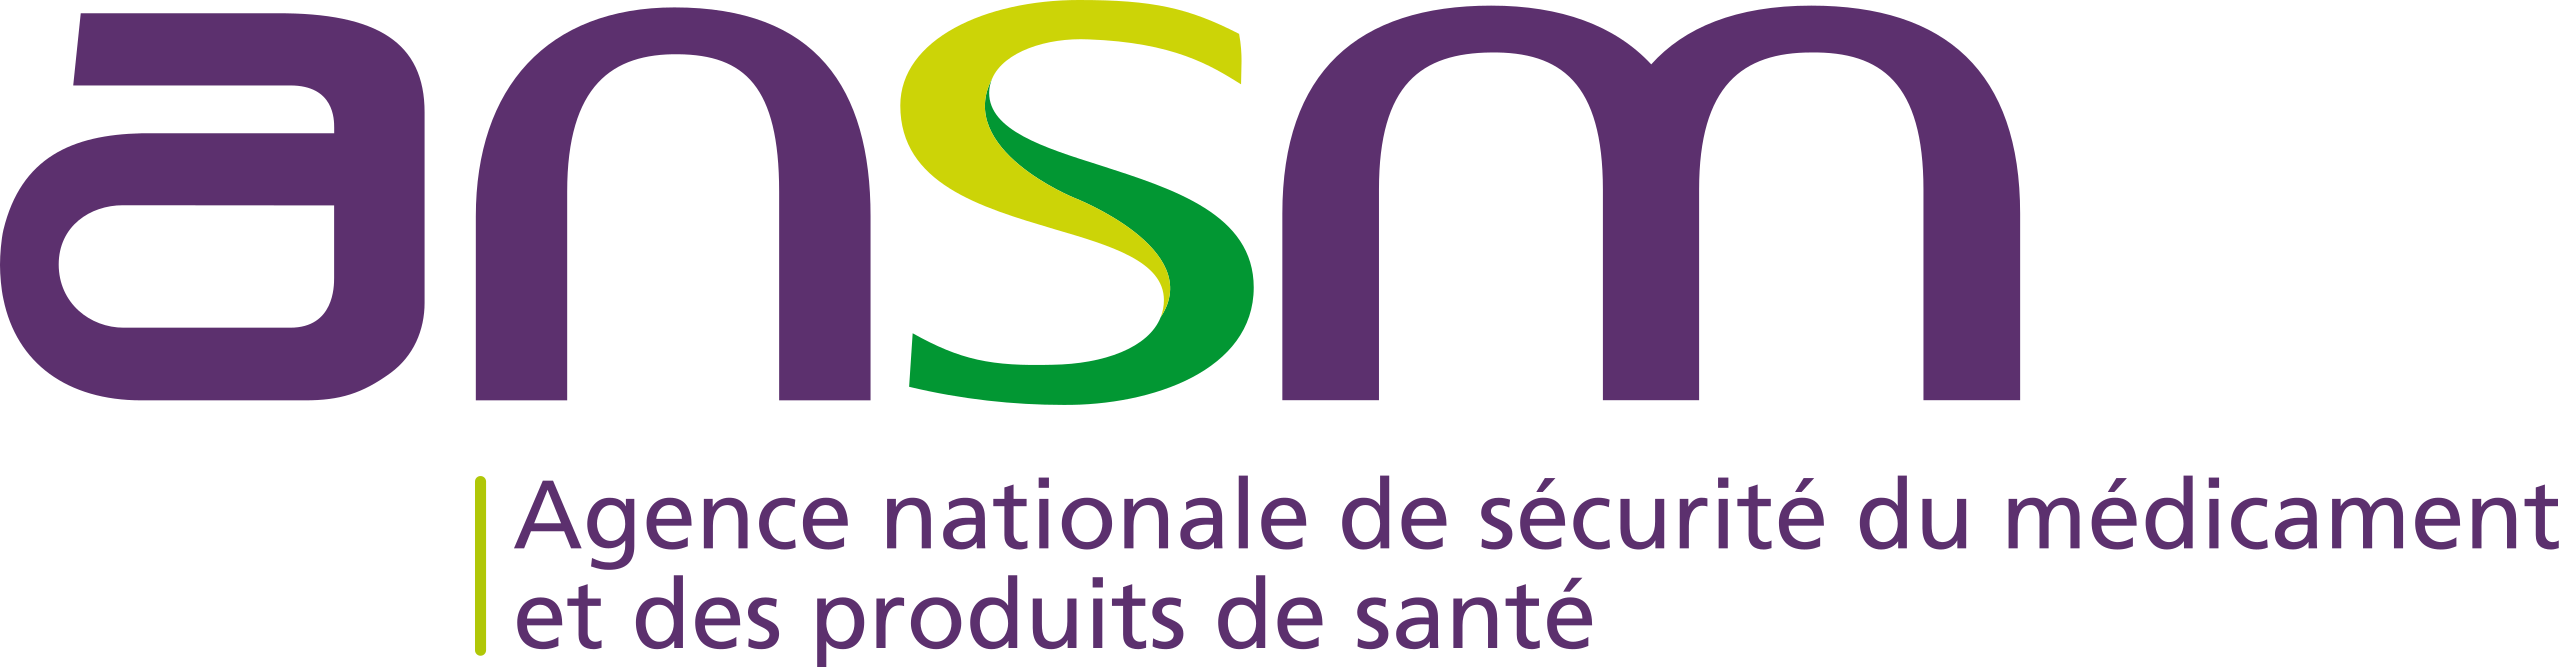 ANSM_logo.svg